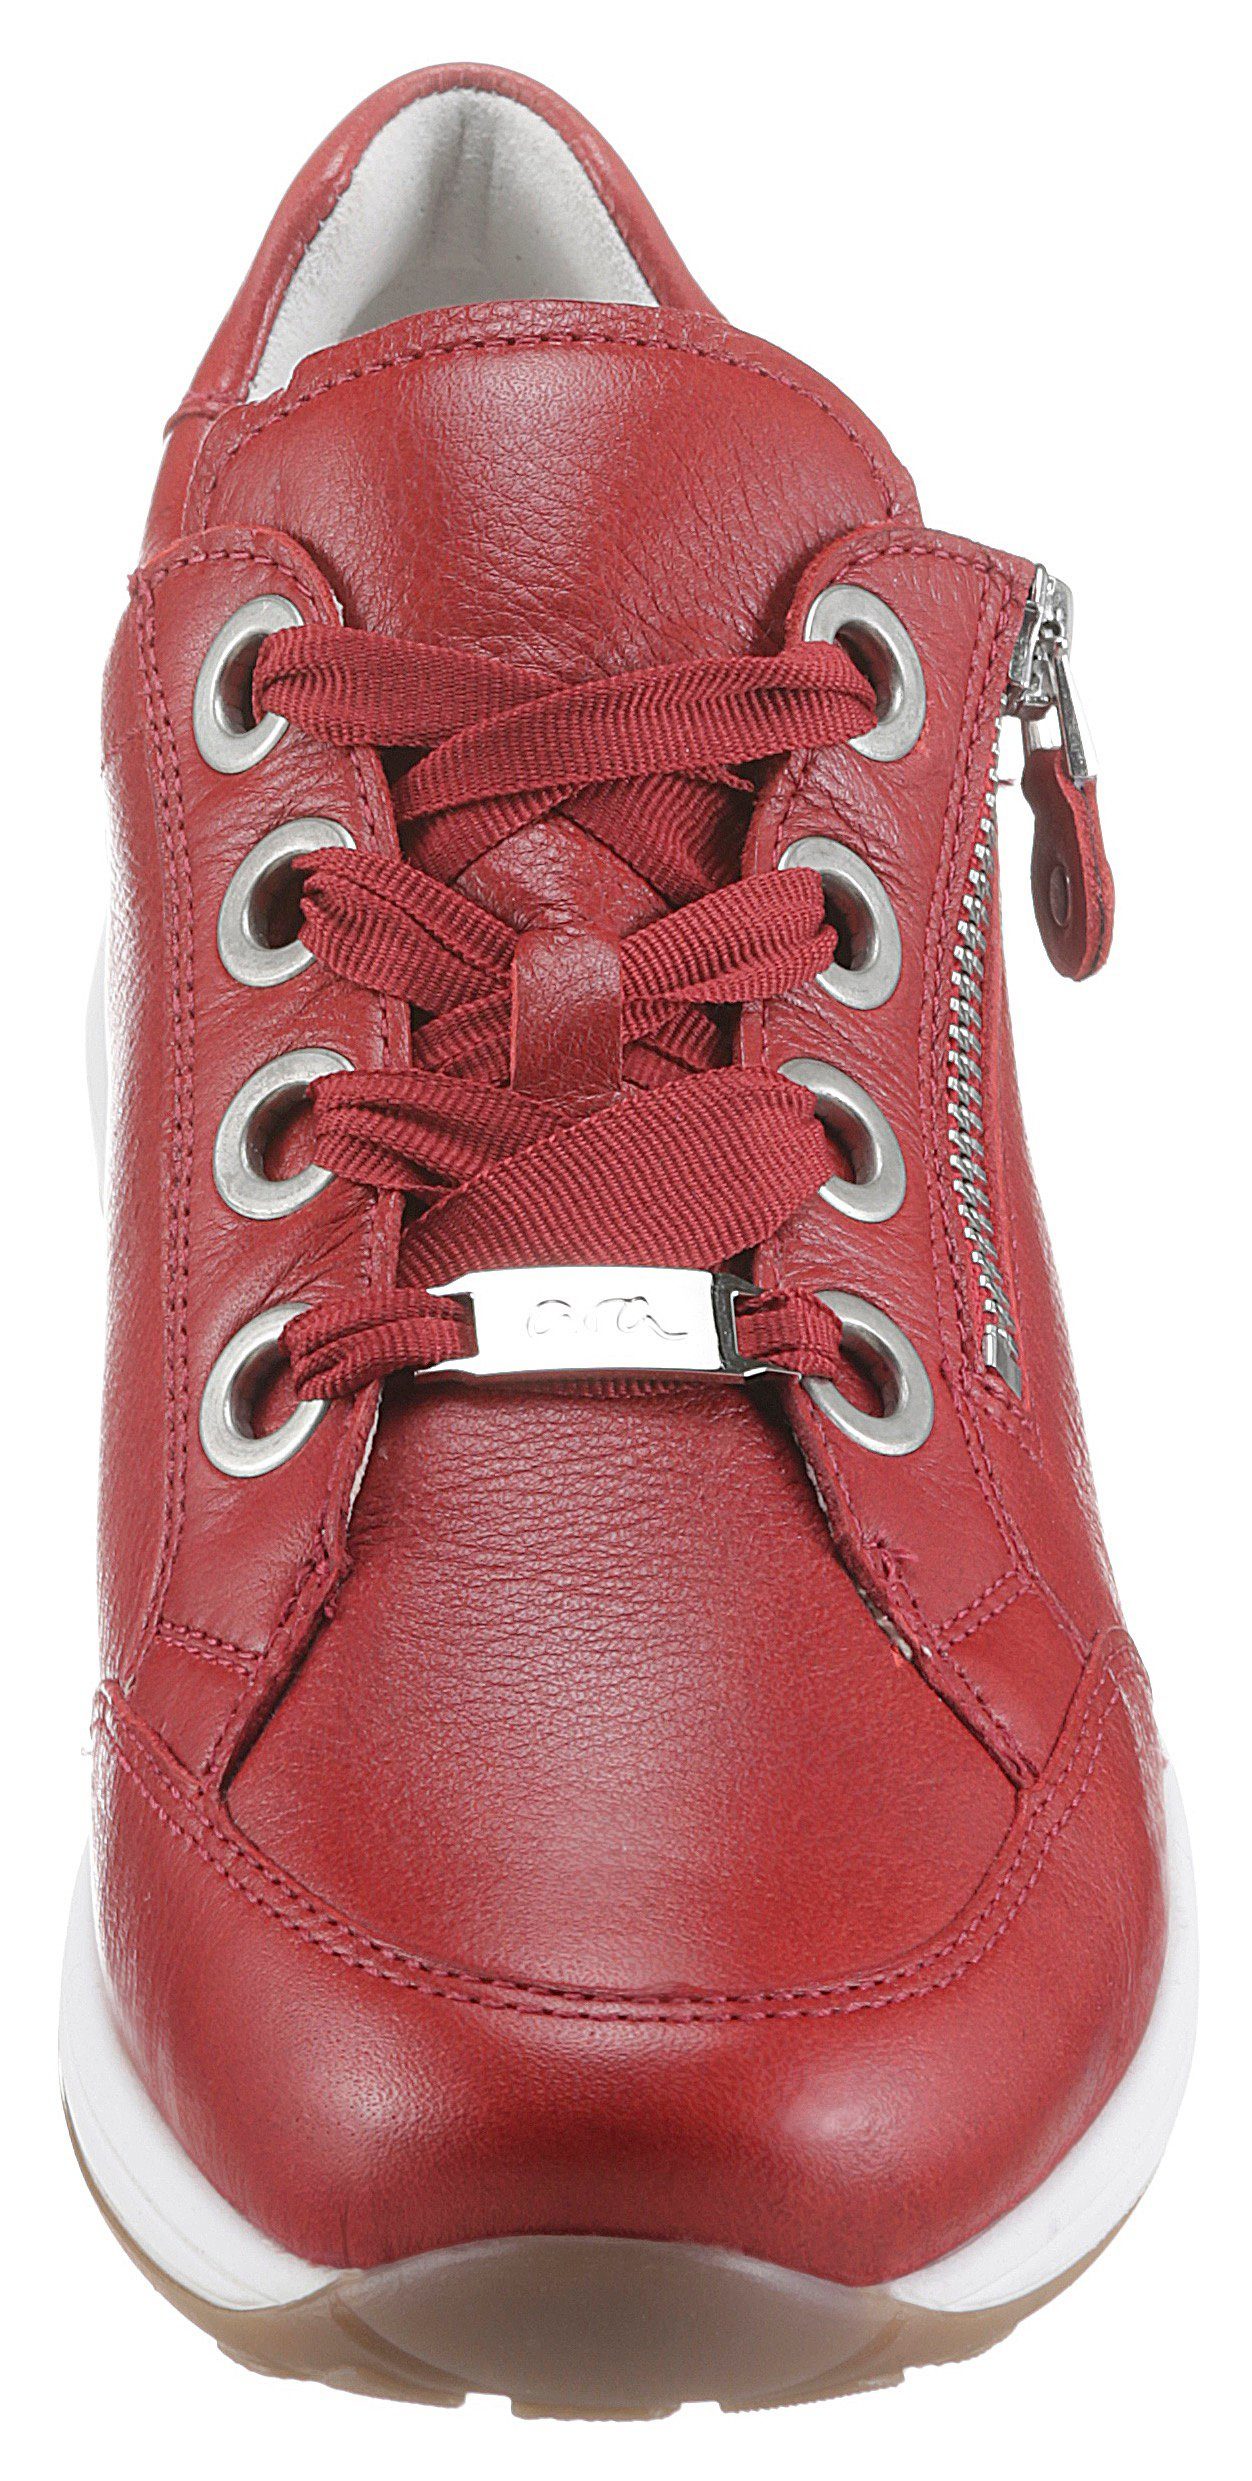 Ara OSAKA Sneaker in rot Schuhweite G bequemer